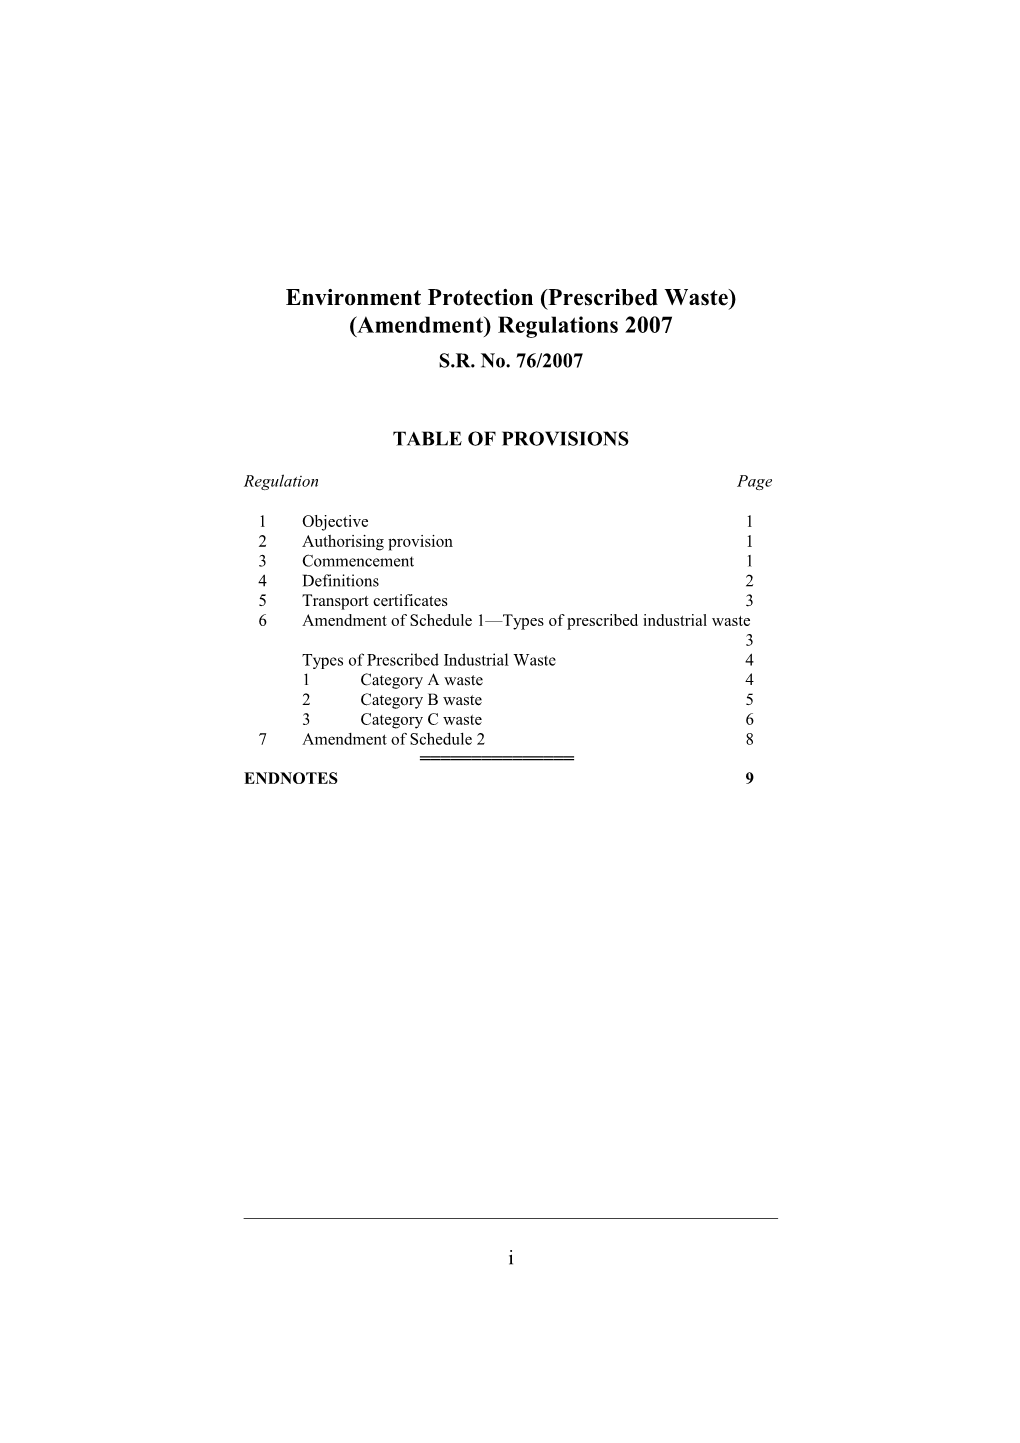 Environment Protection (Prescribed Waste) (Amendment) Regulations 2007